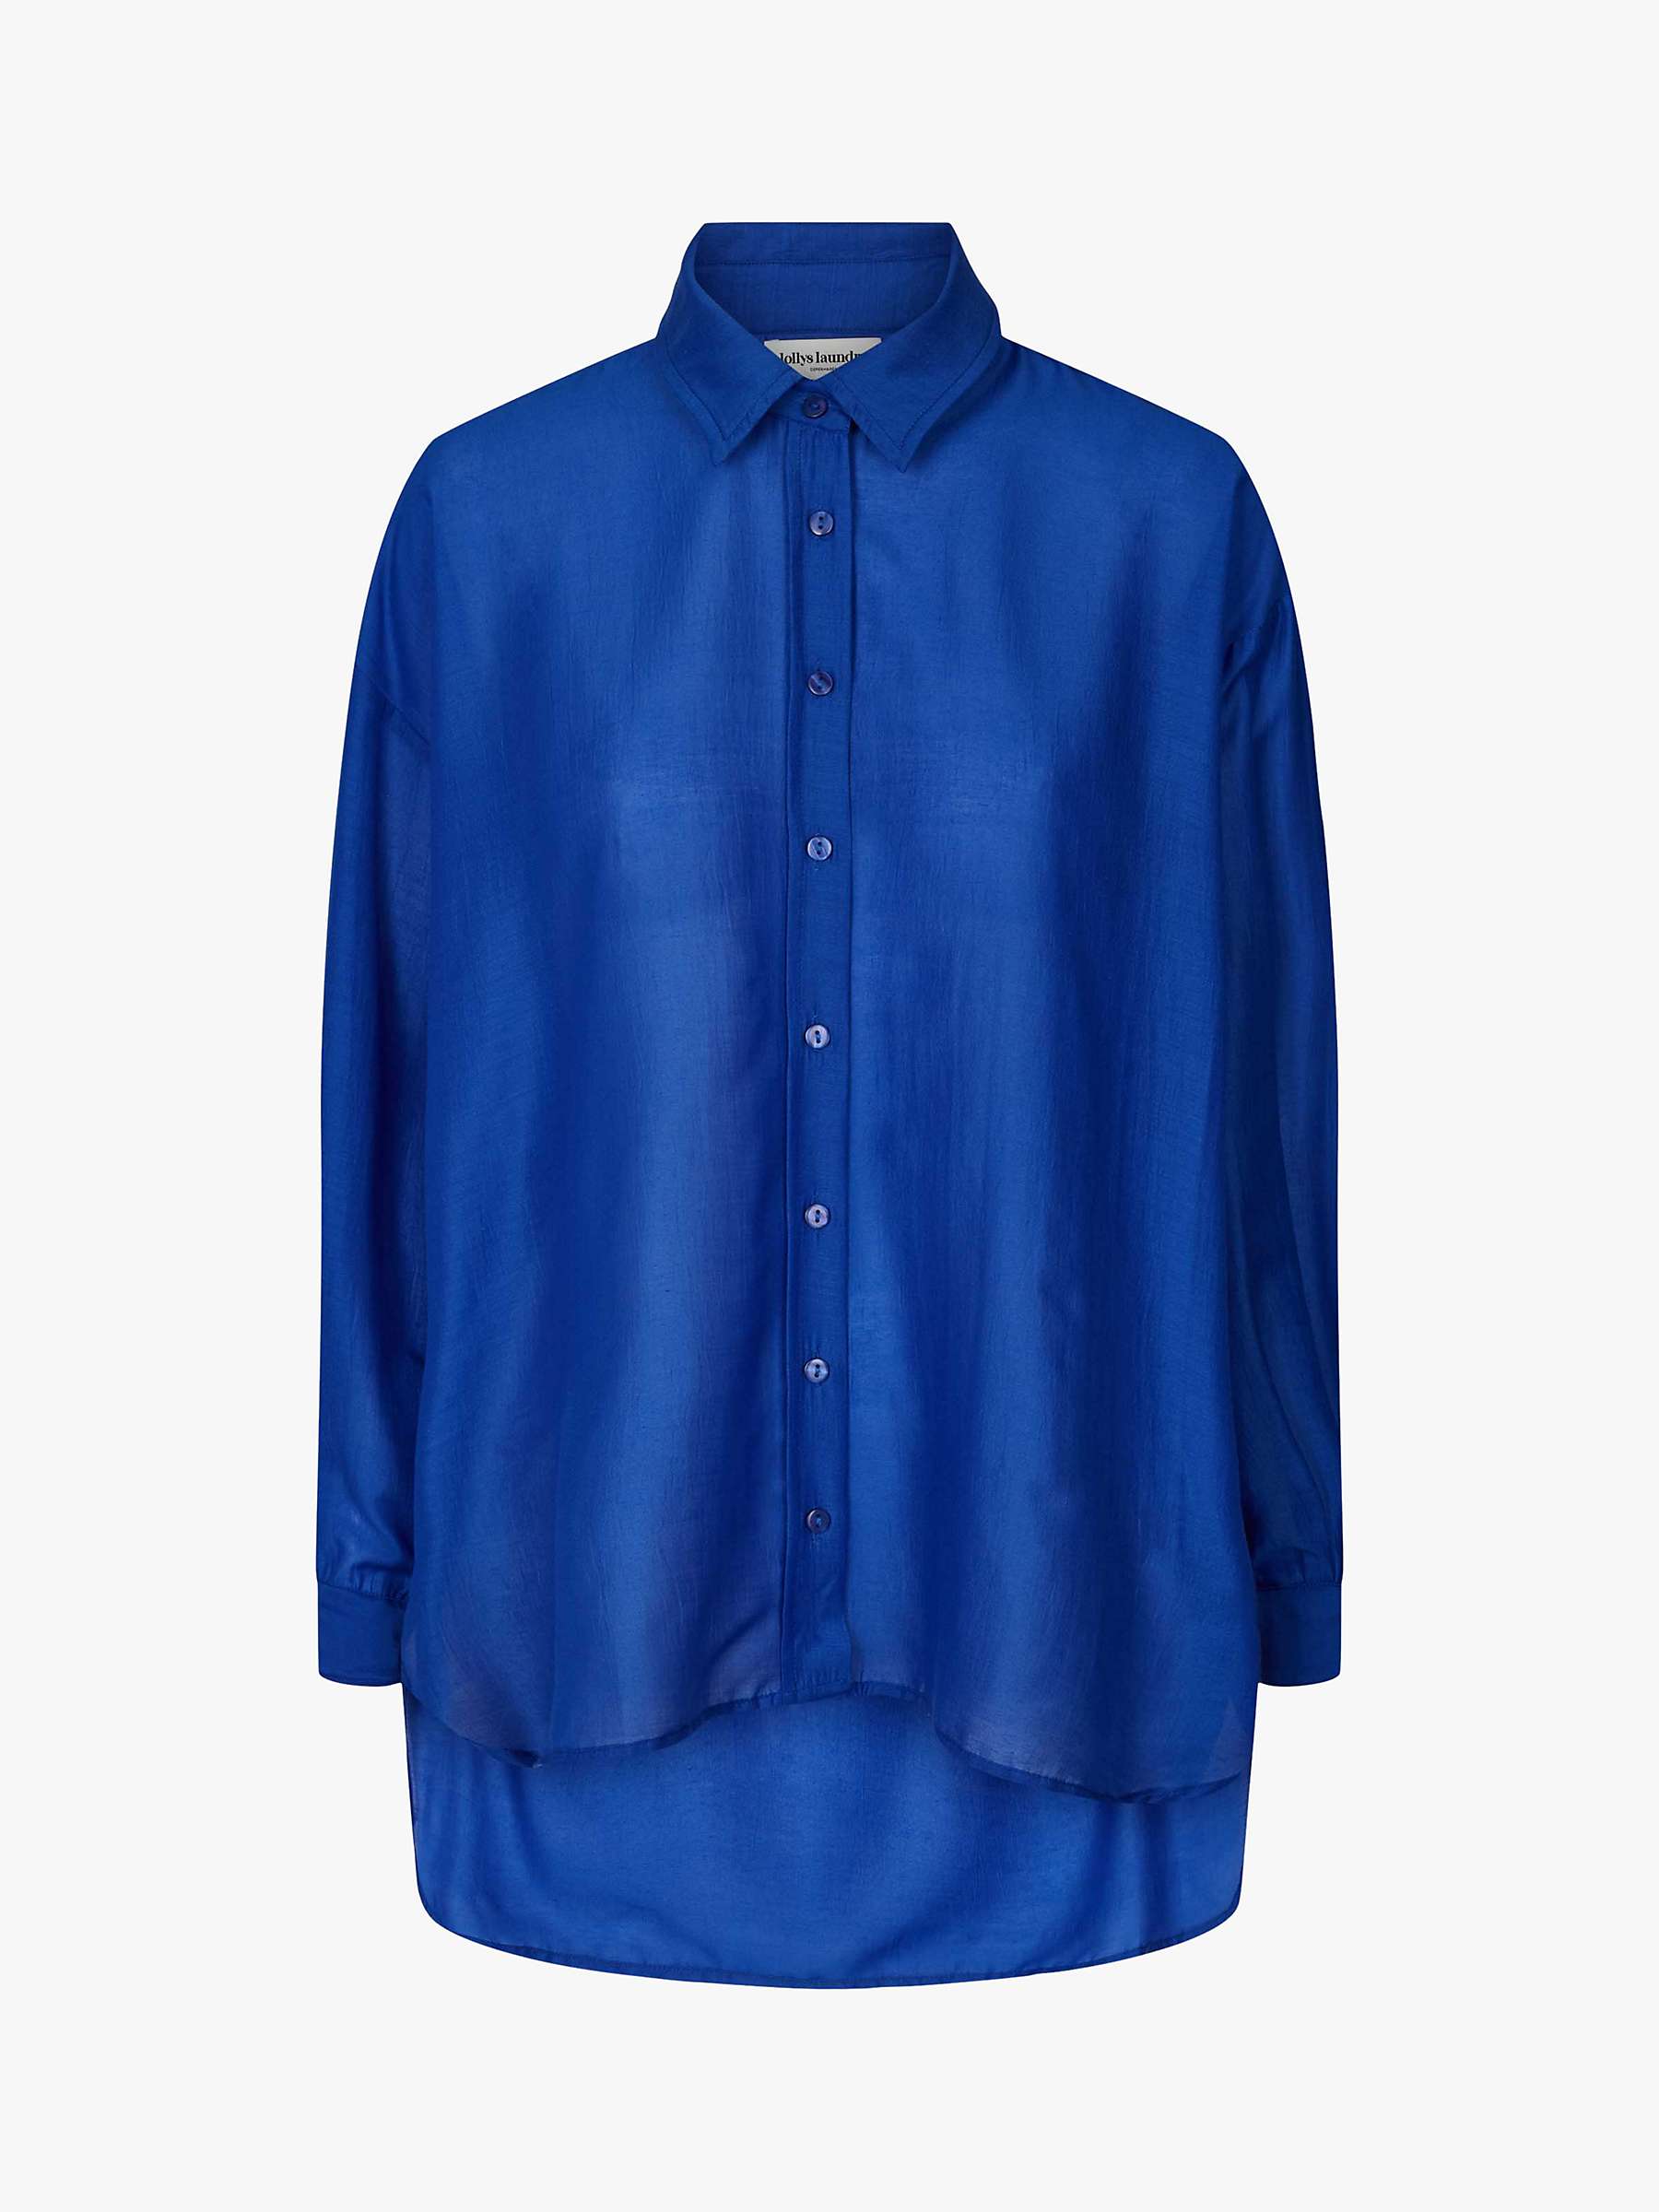 Lollys Laundry Nola Long Sleeve Shirt, Neon Blue at John Lewis & Partners